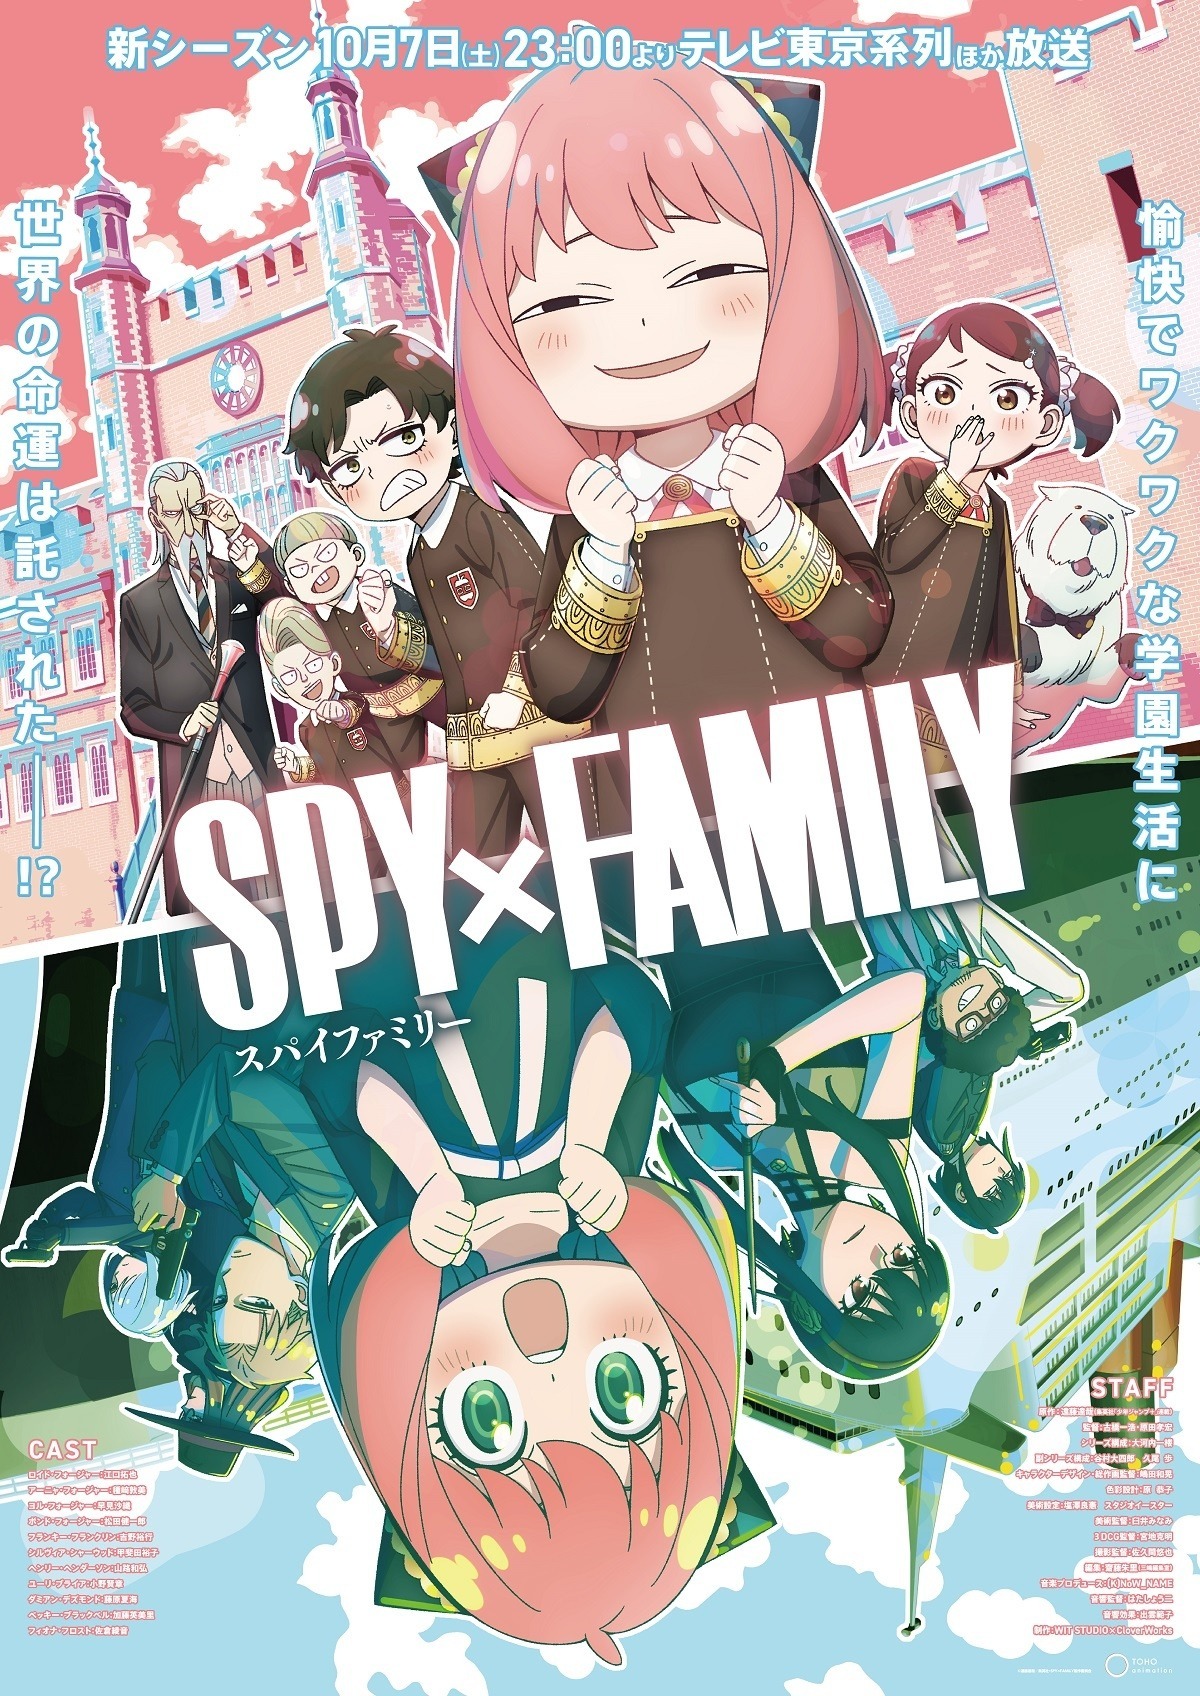 SPY x FAMILY Anime Kicks off Season 2 with Celebratory Artwork